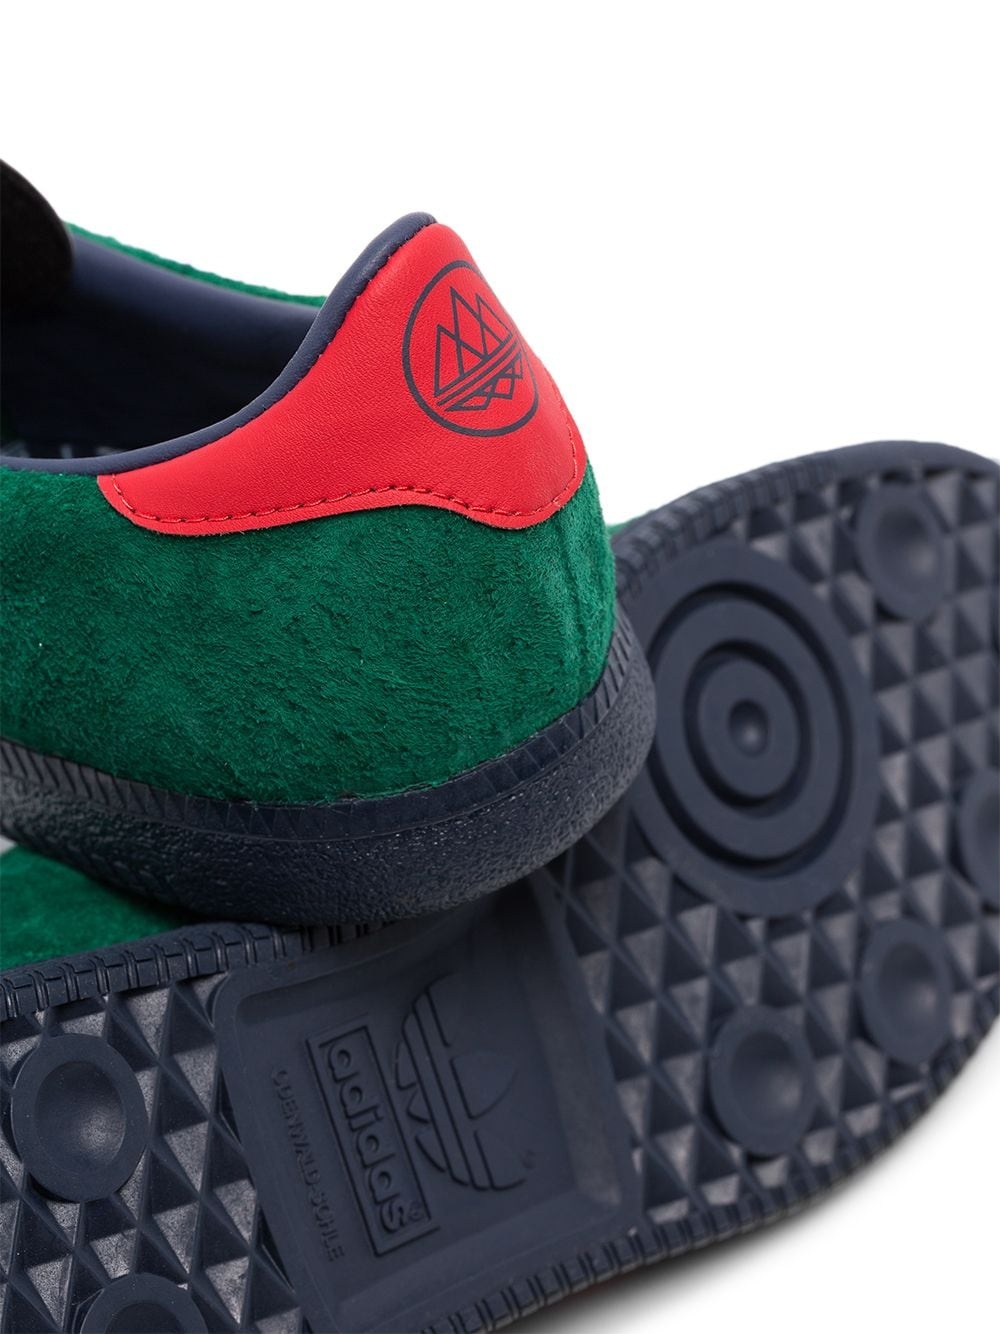 Blackburn SPZL "Collegiate Green/Scarlet" sneakers - 3